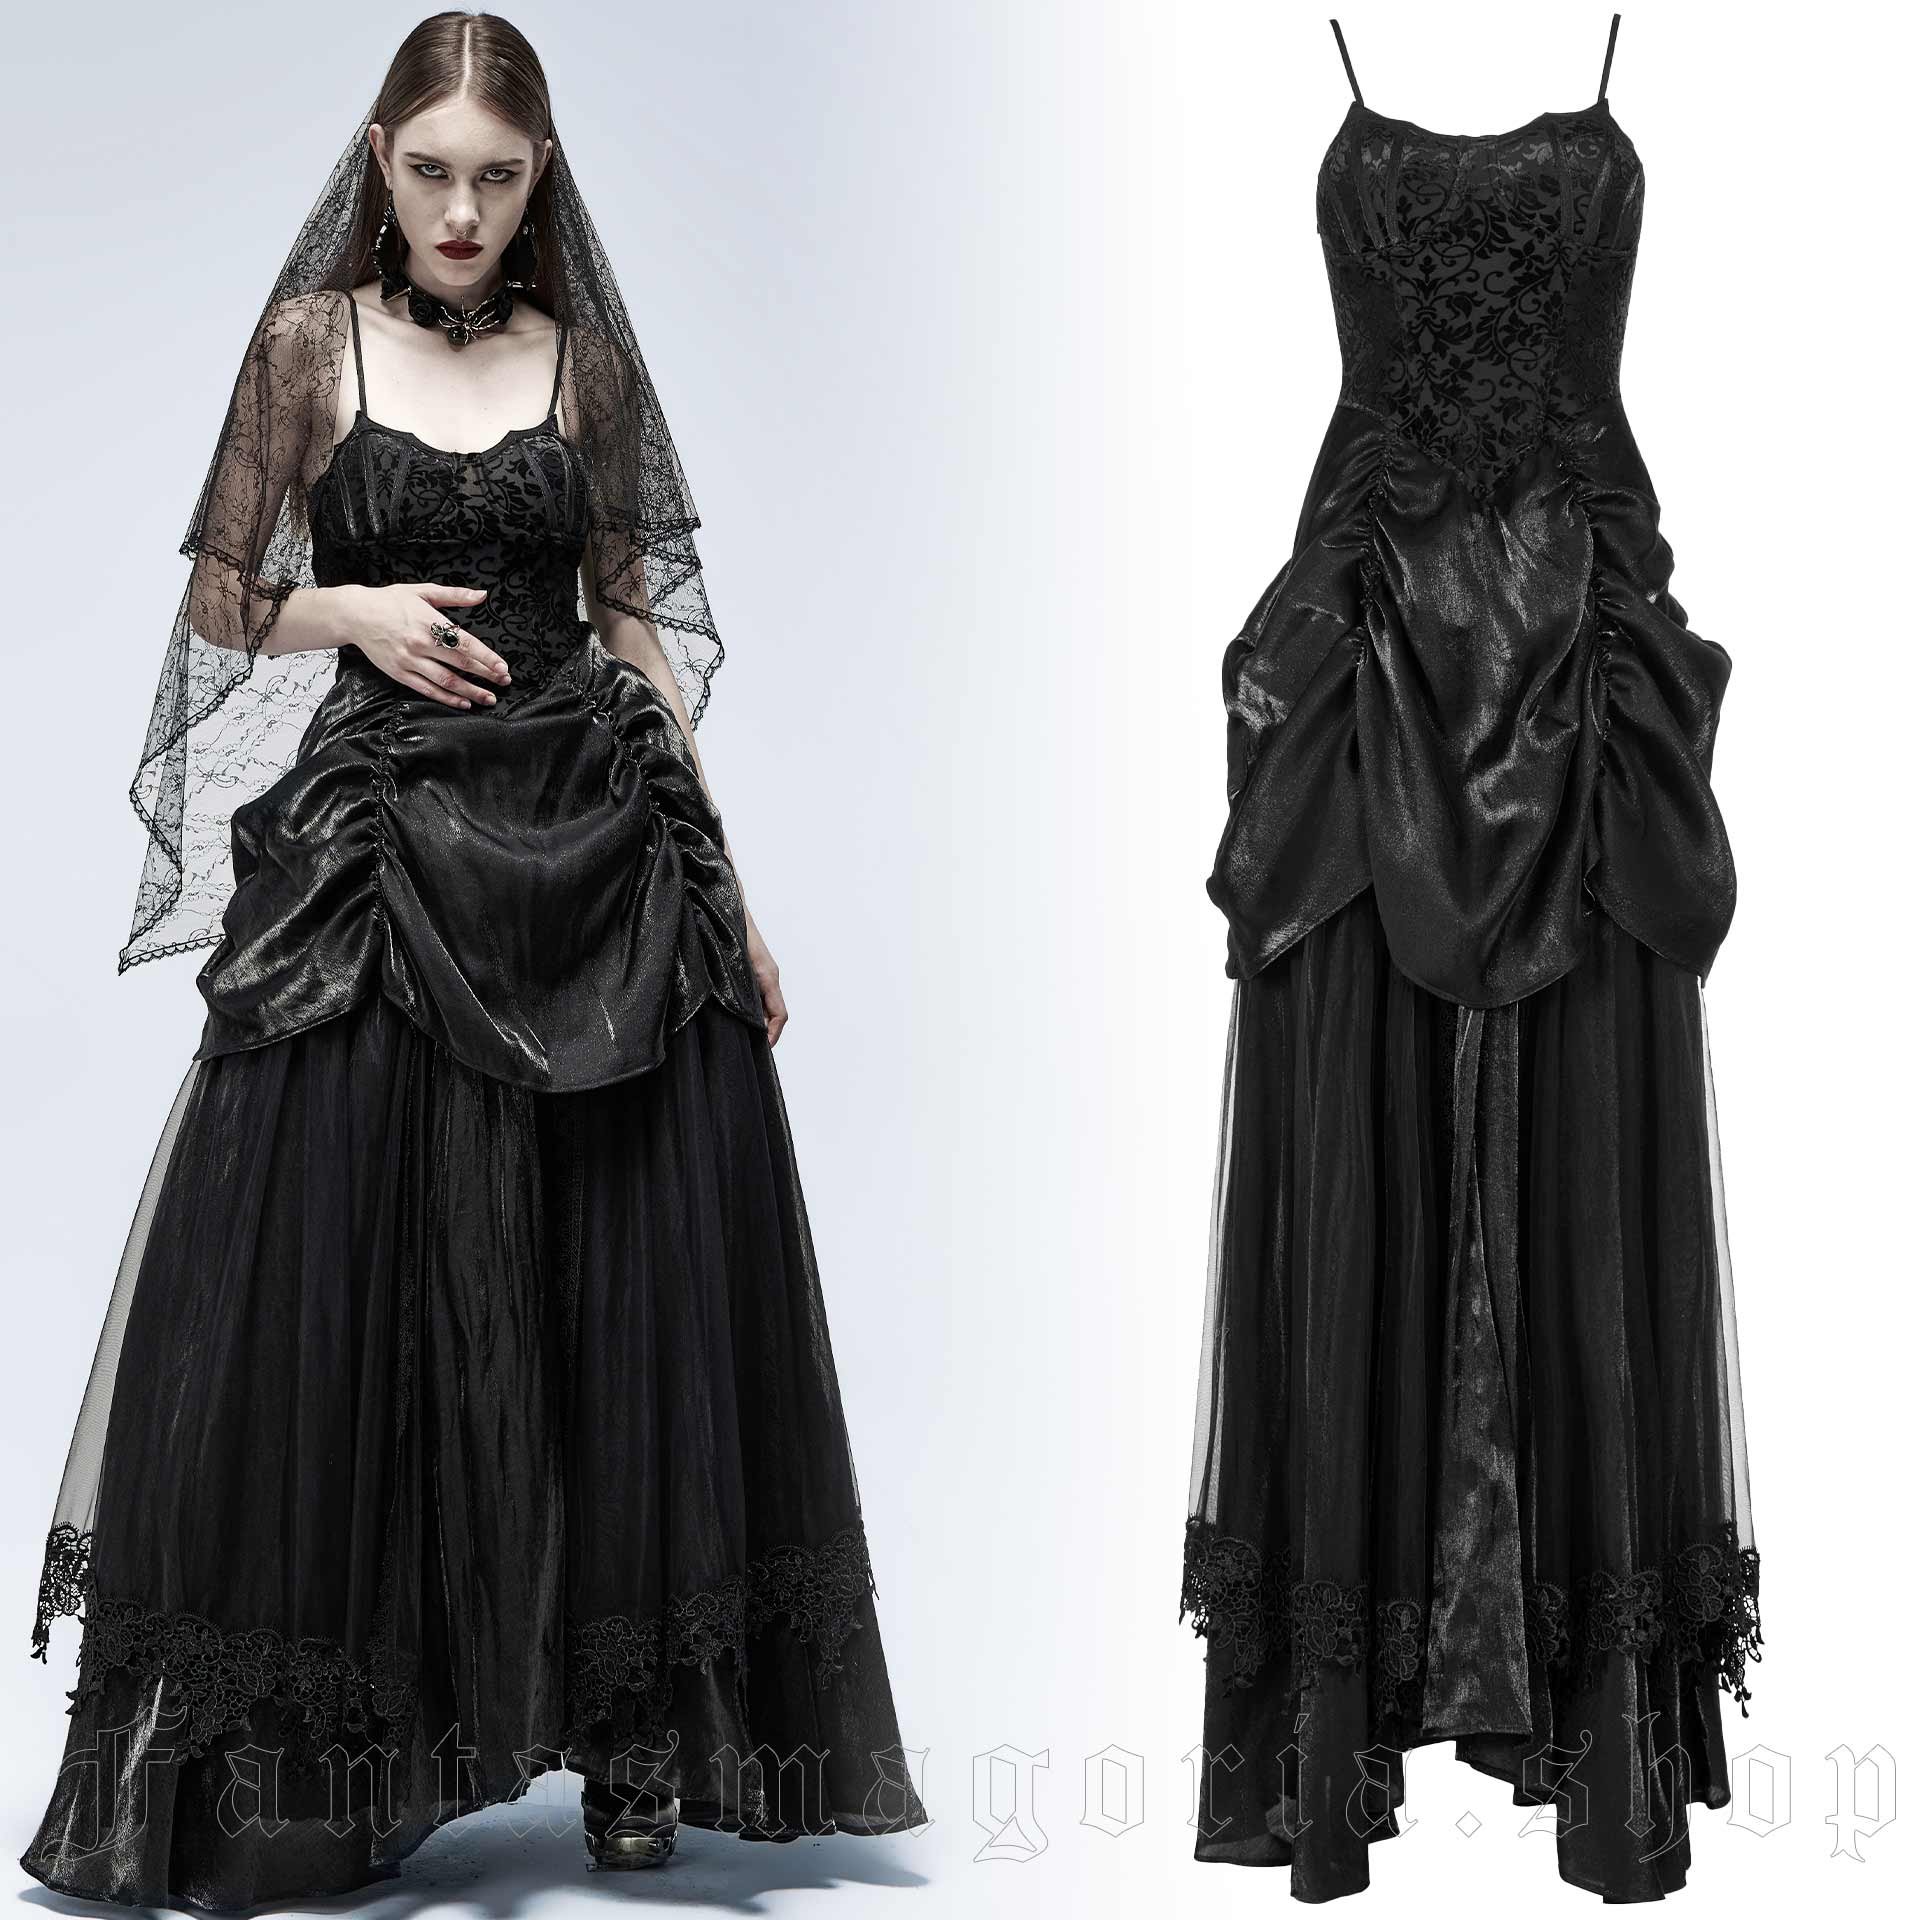 Dark Faerie Dress WQ-557/BK by Punk Rave brand